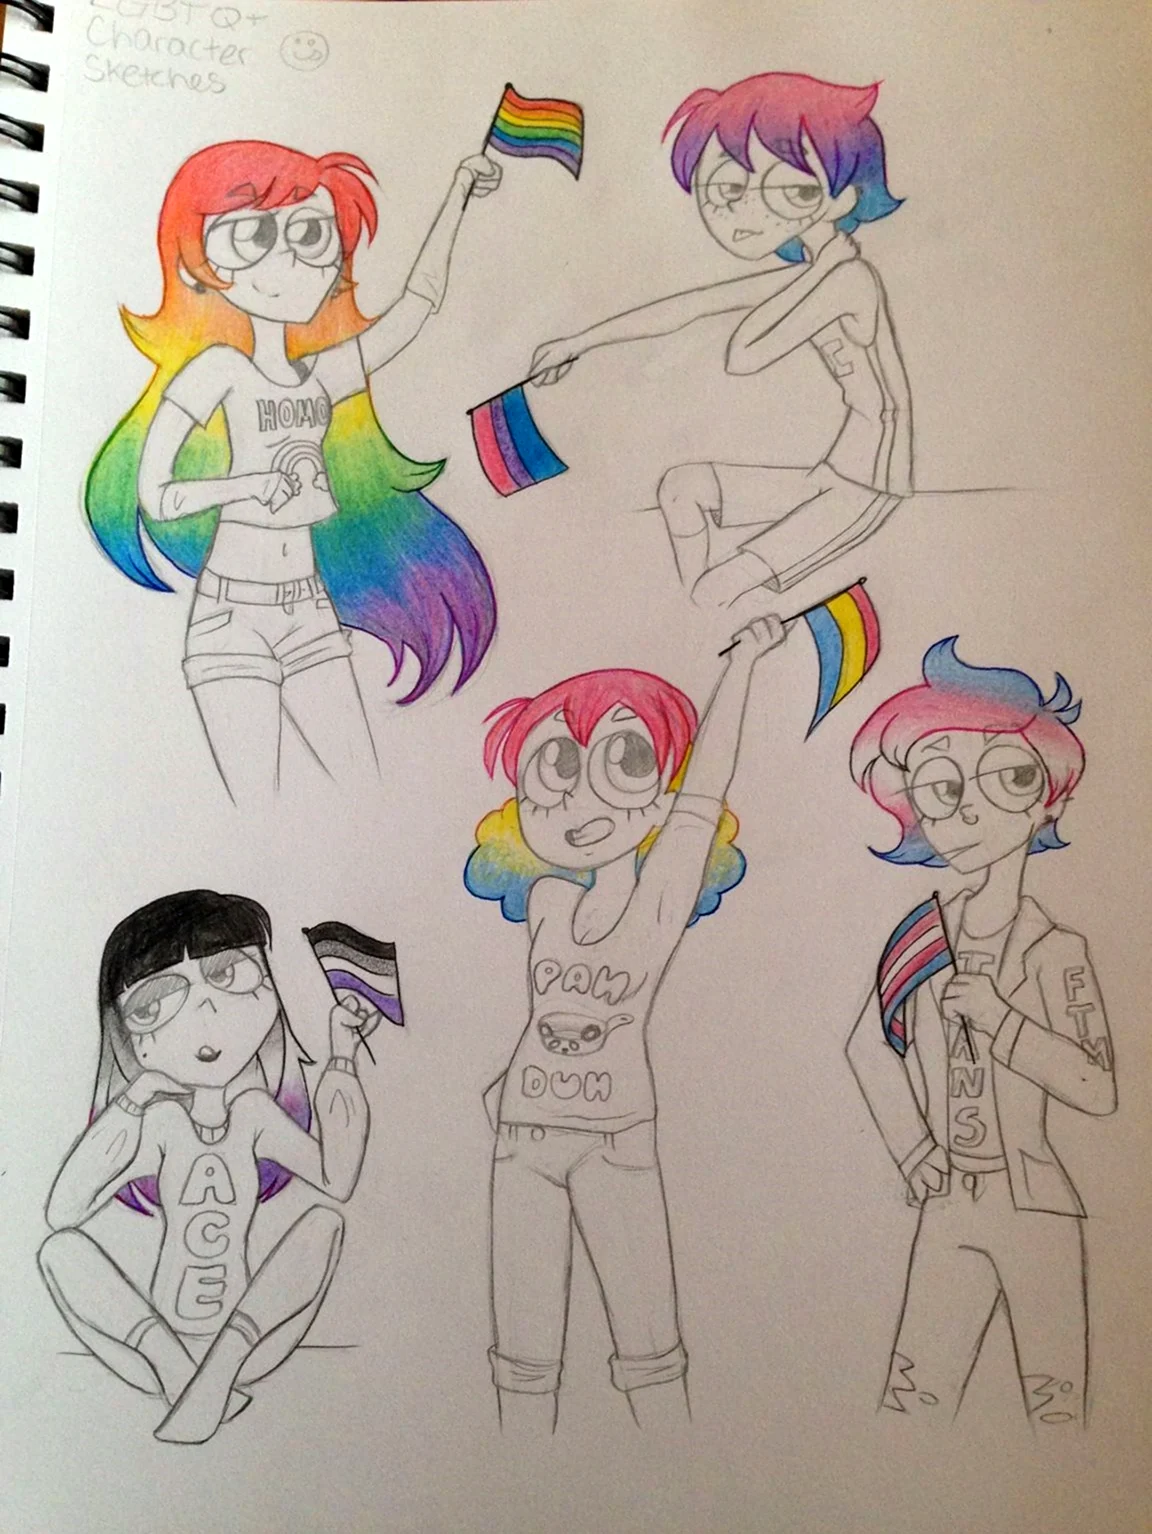 ЛГБТ рисунки для срисовки. Для срисовки